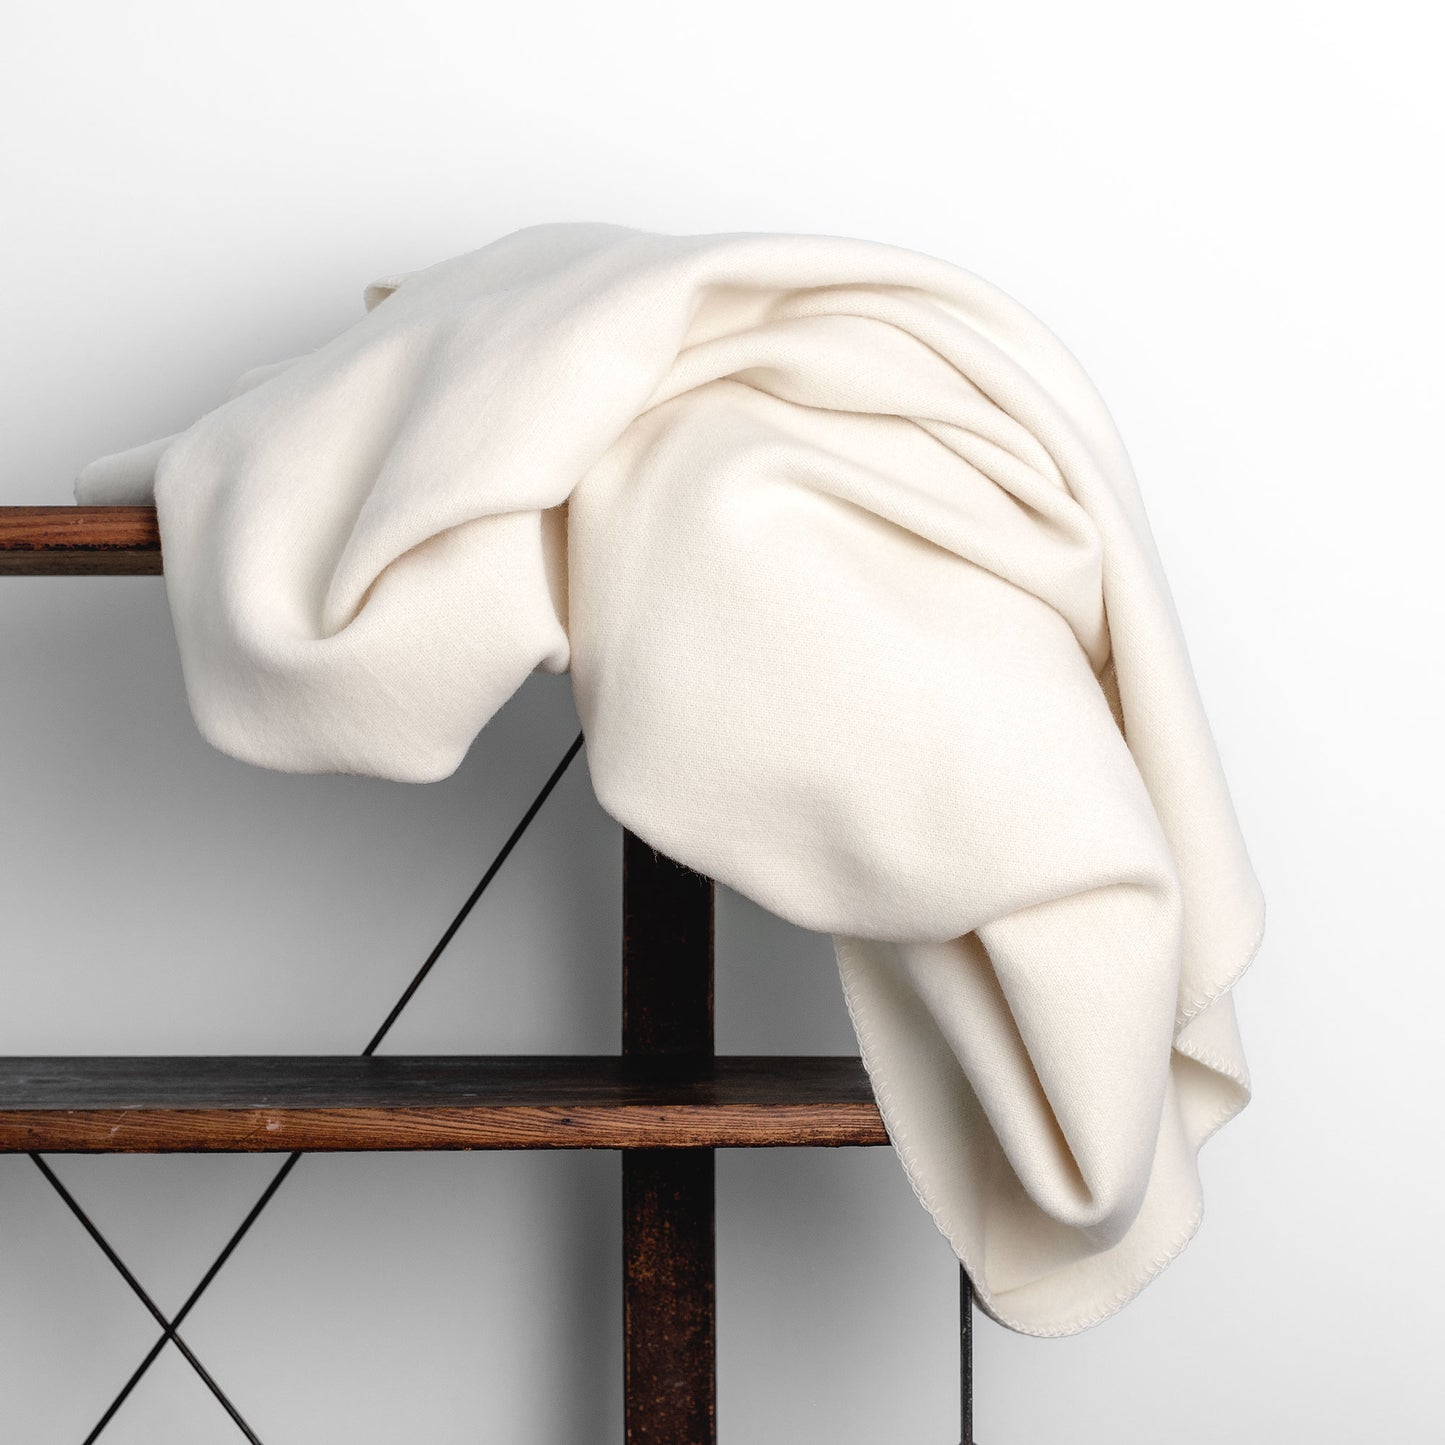 Merino Wool Baby Blanket, 100% Pure and Extra Soft Merino Lambswool Blanket in Natural White